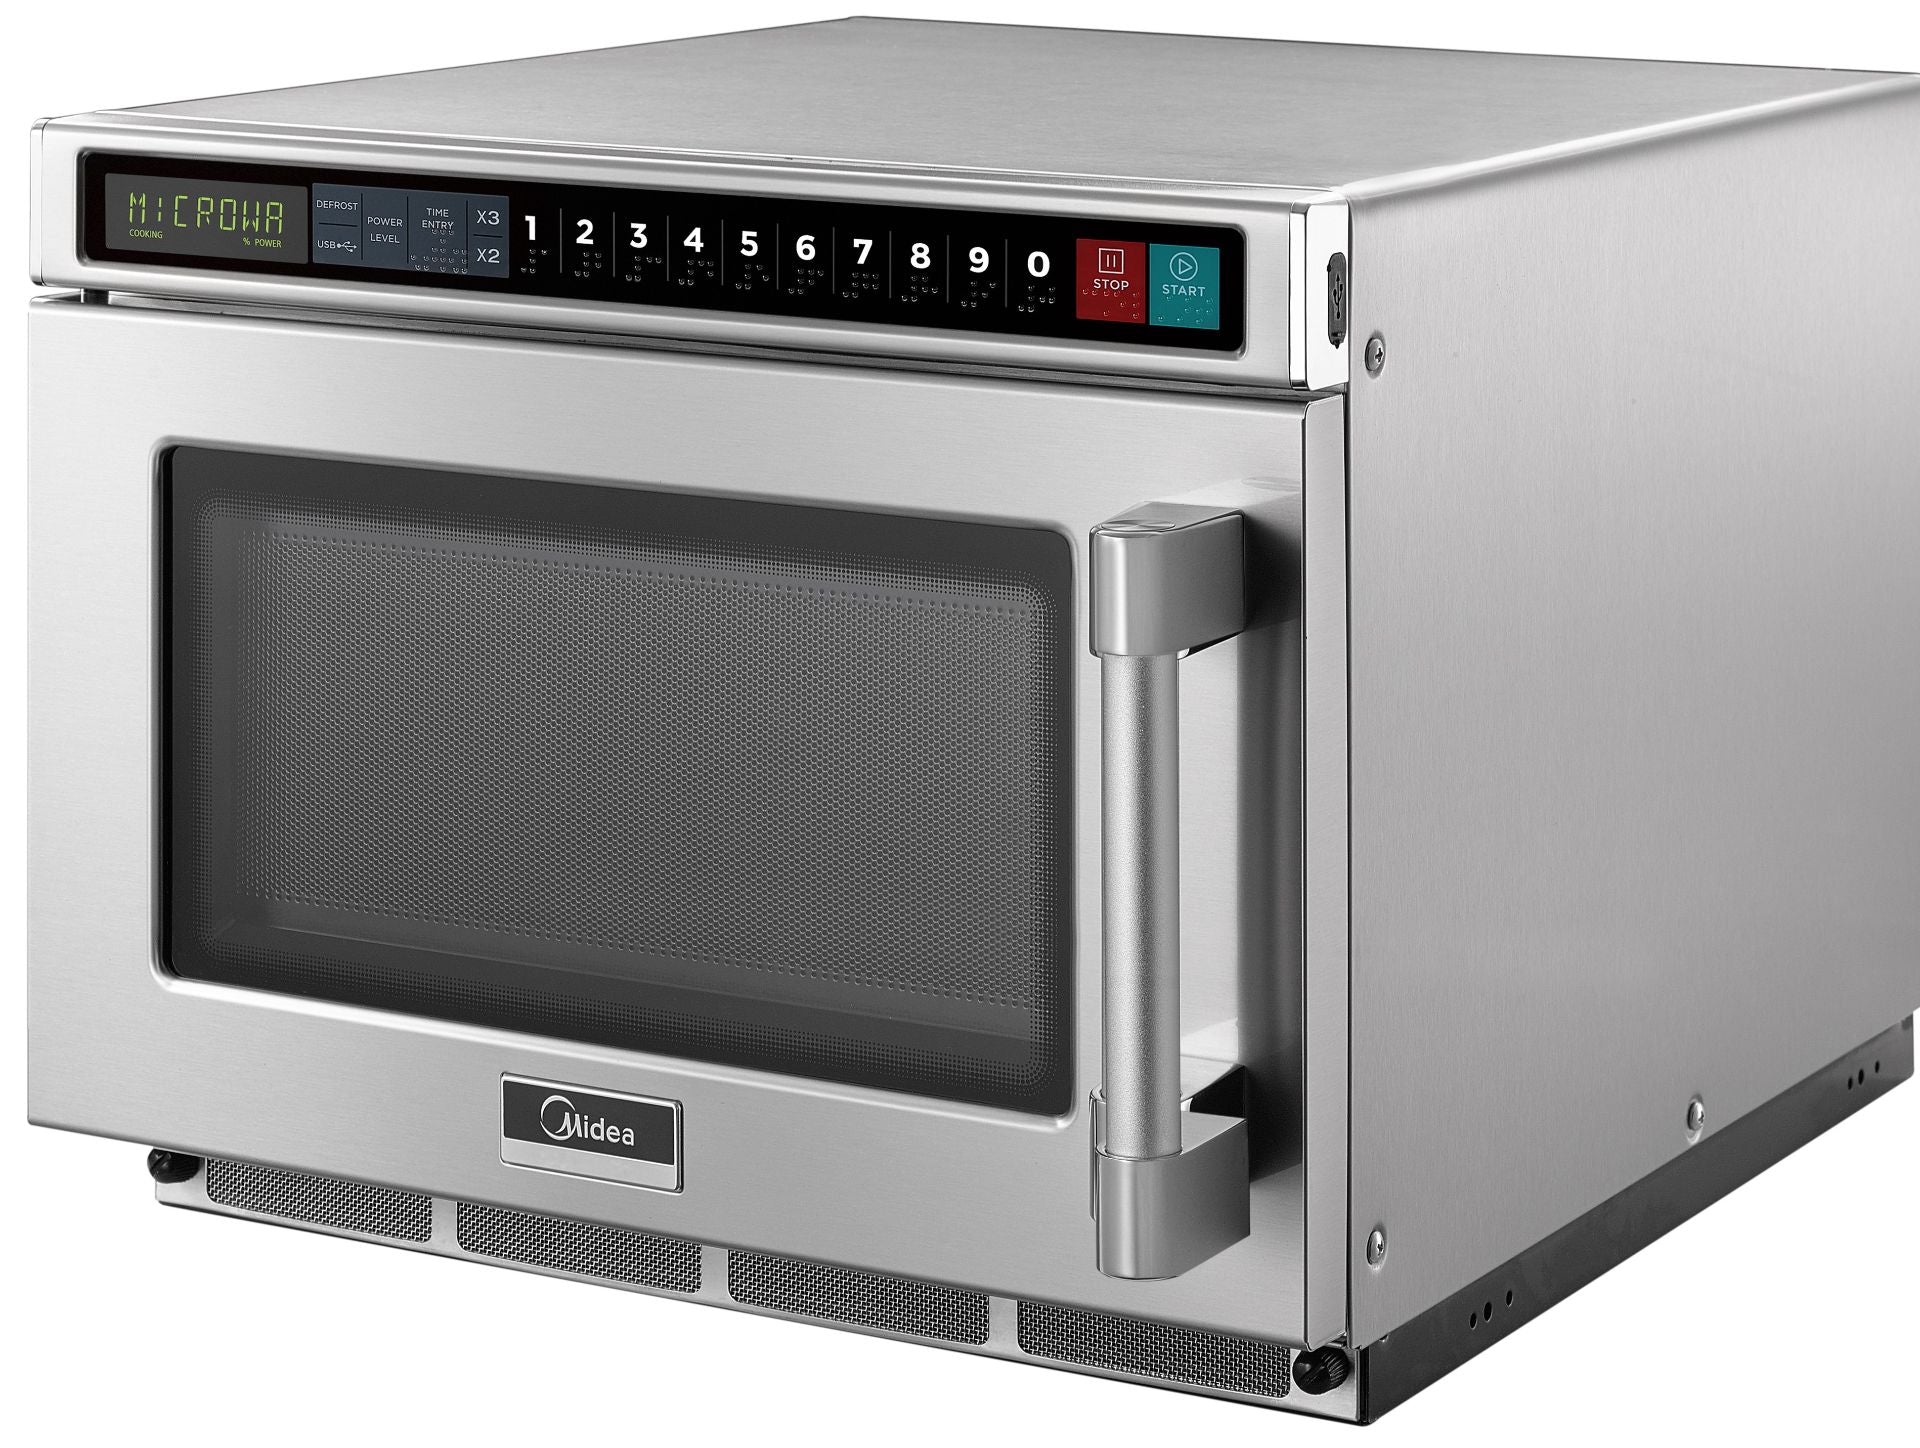 MIDEA 1217G1S 0.6 Cu Ft. 1200W FlashChef Scan & Go Heavy Duty Microwave